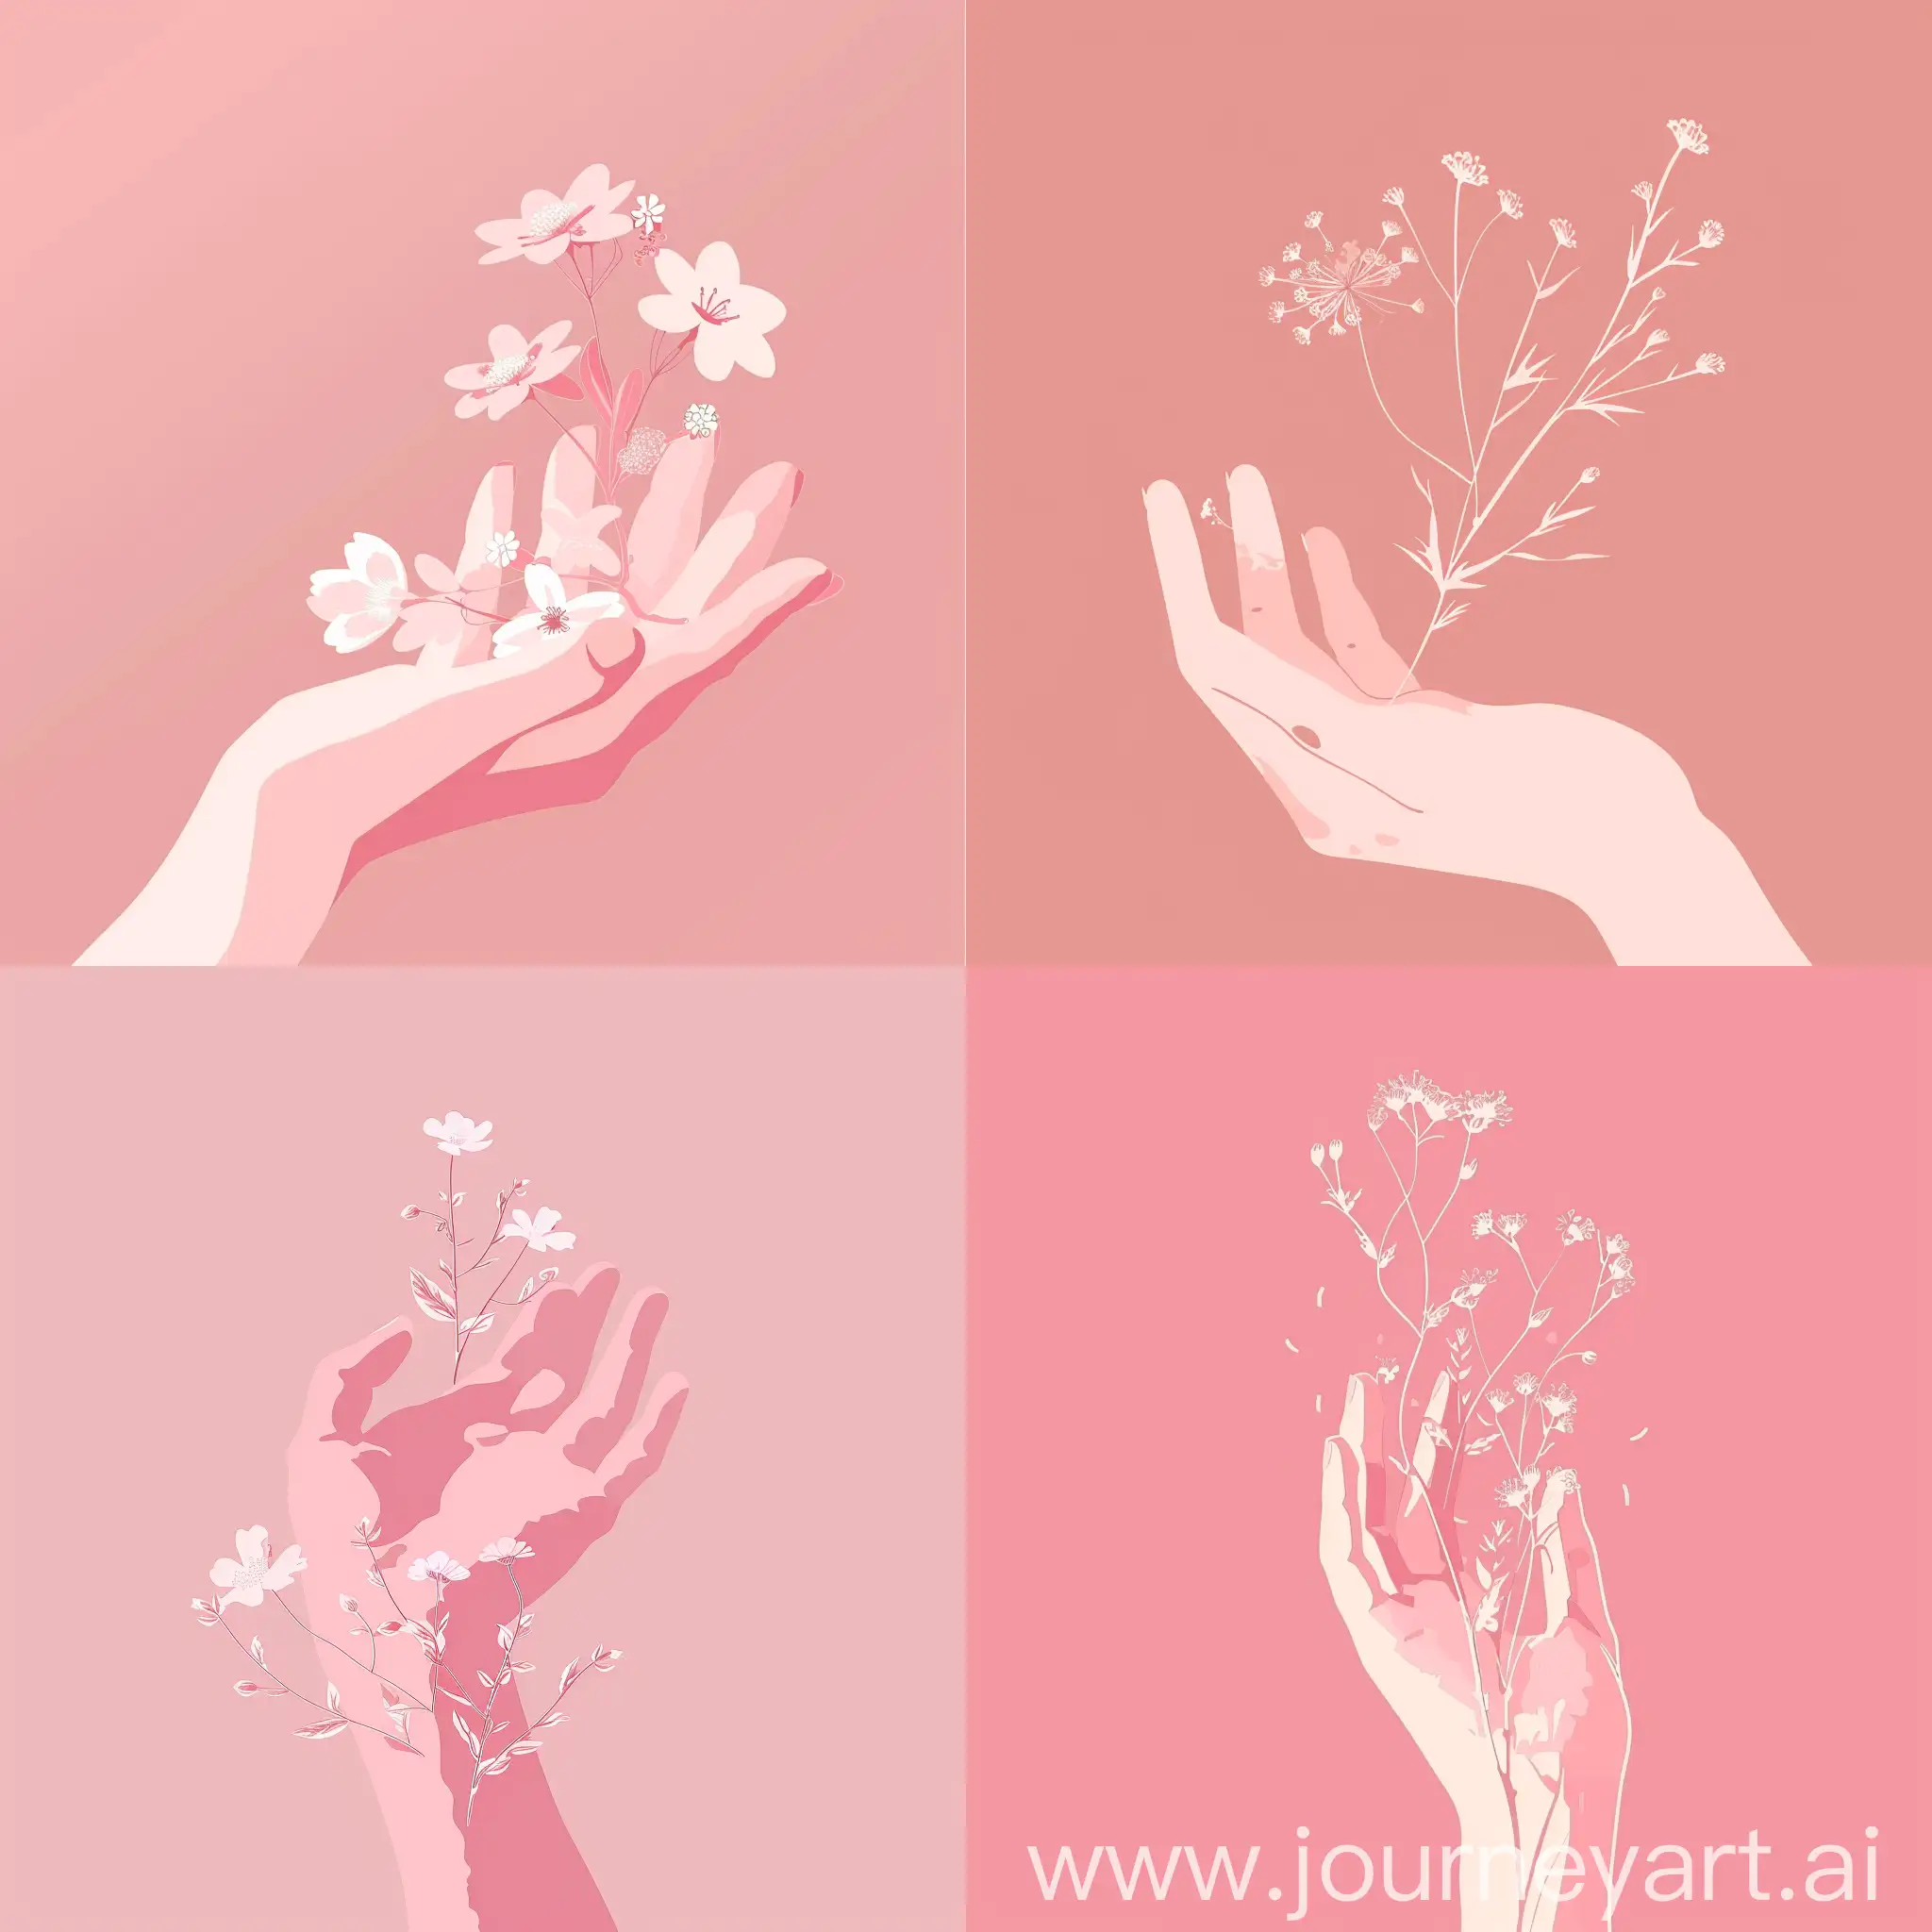 Minimalist-Vector-Illustration-of-Hand-Holding-Pink-Flower-Inflorescences